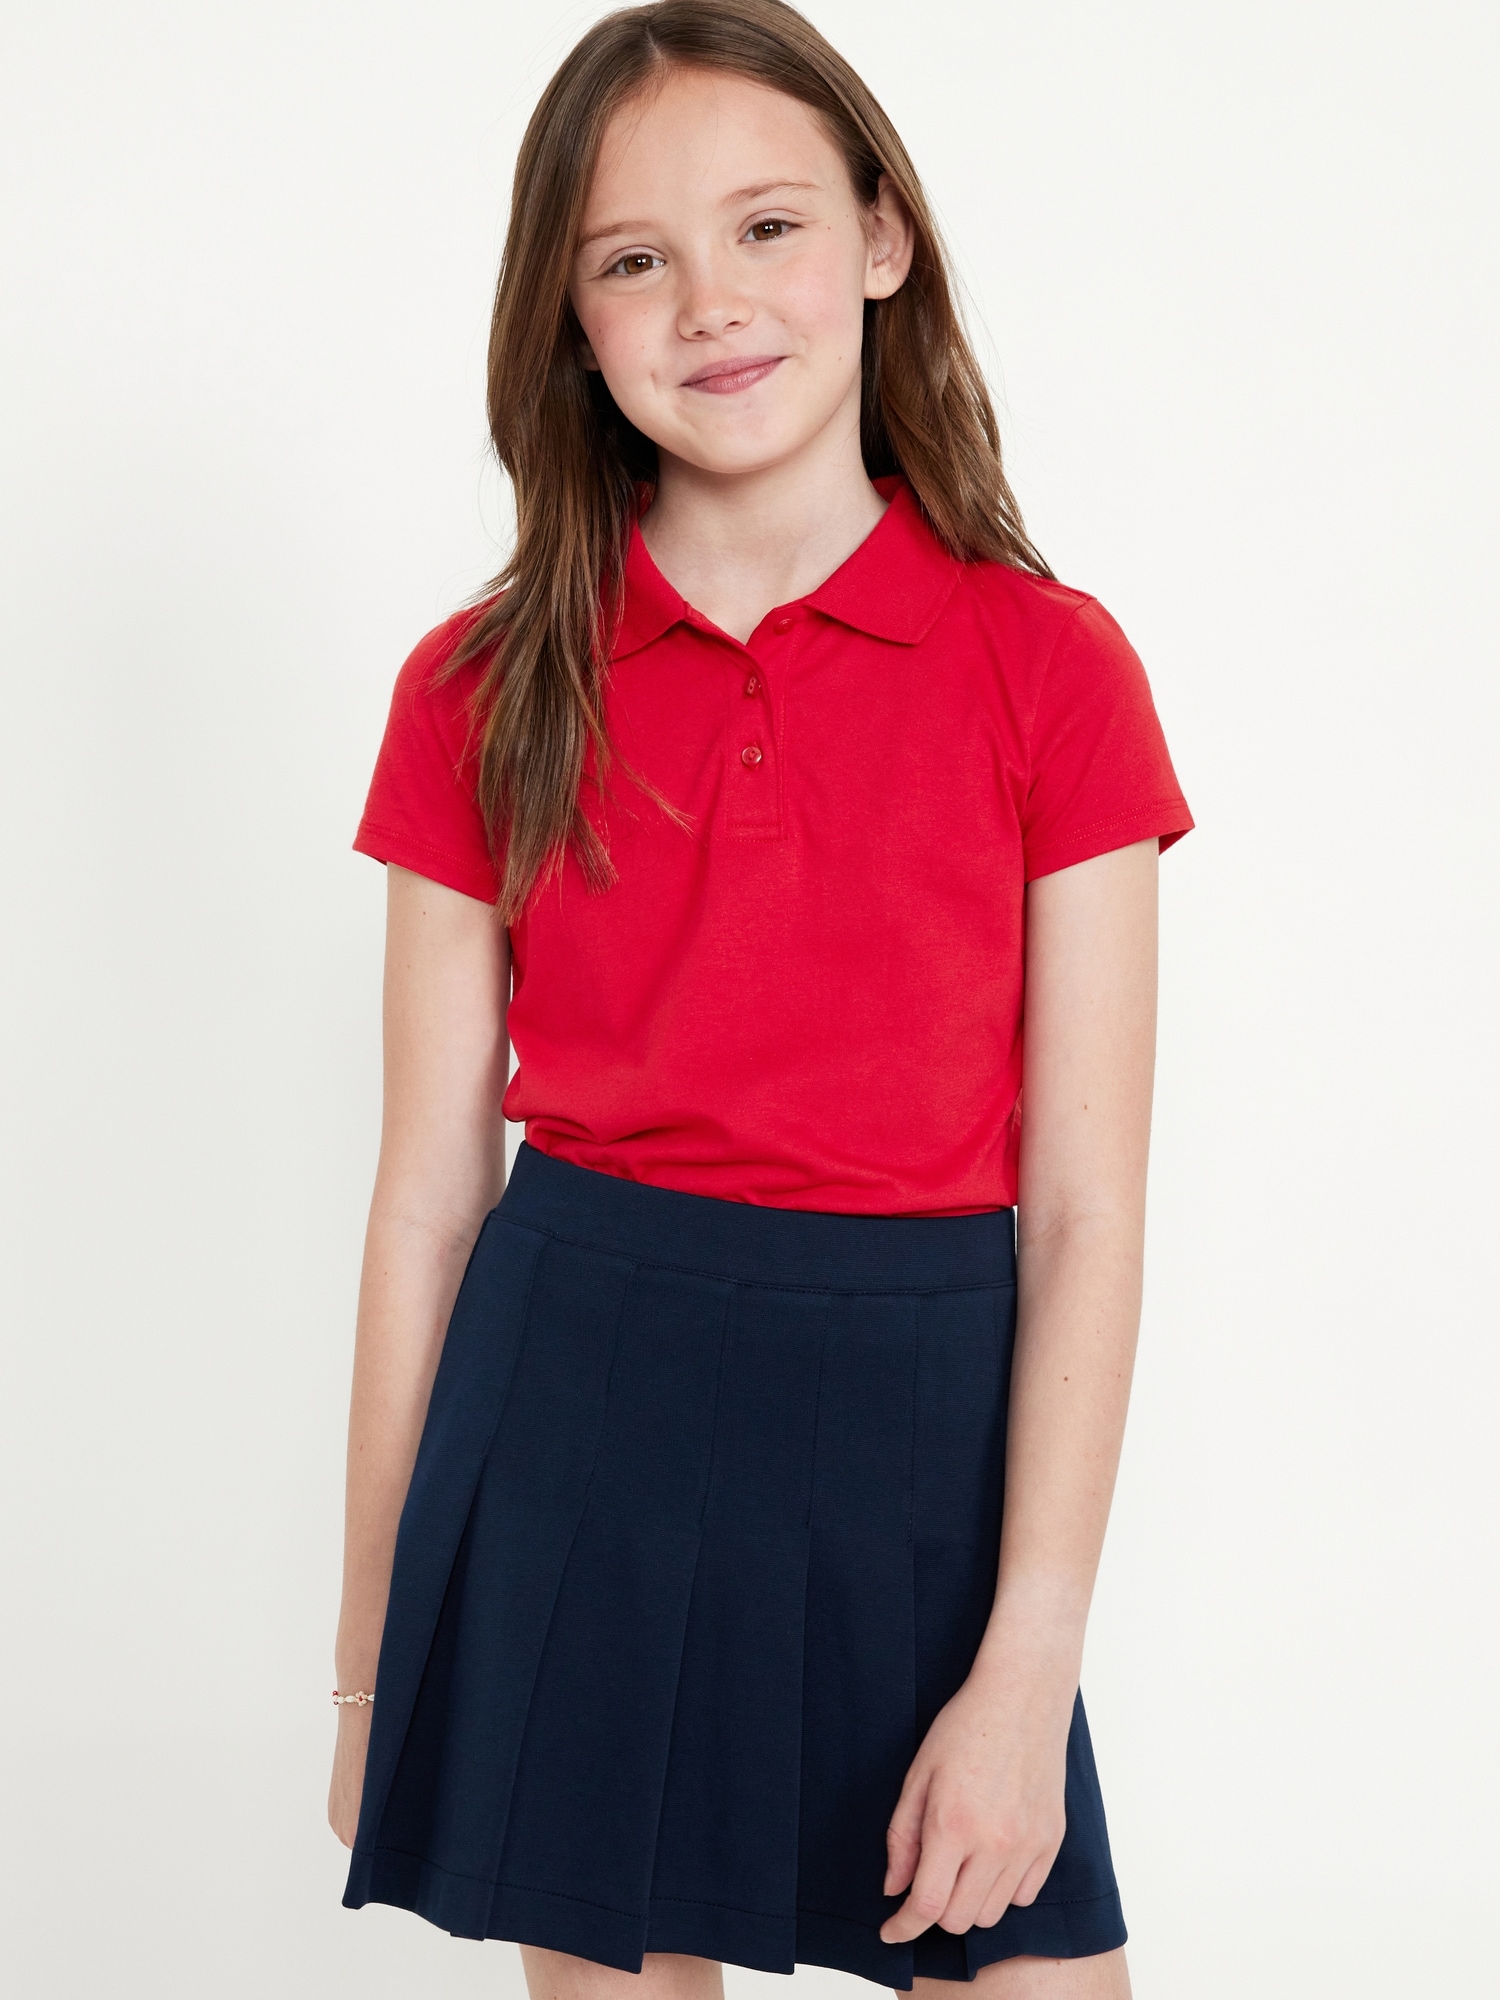 School Uniform Polo Shirt for Girls